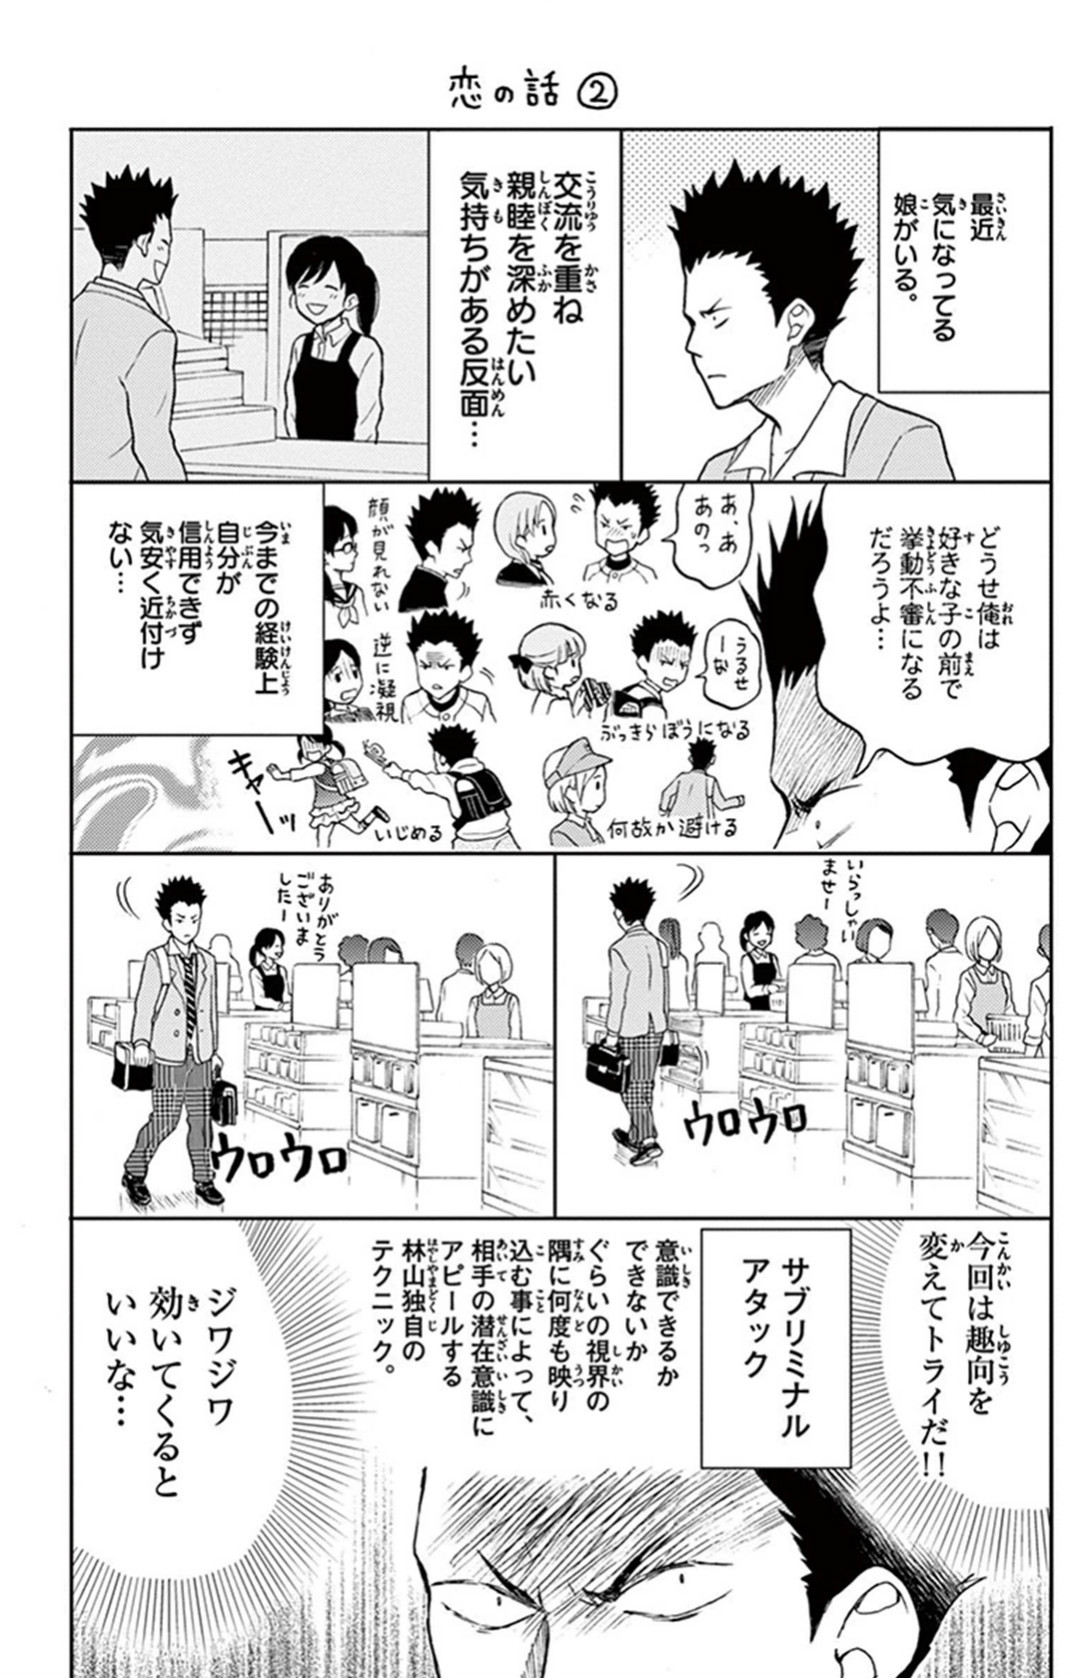 Yugami-kun ni wa Tomodachi ga Inai - Chapter 026.5 - Page 2